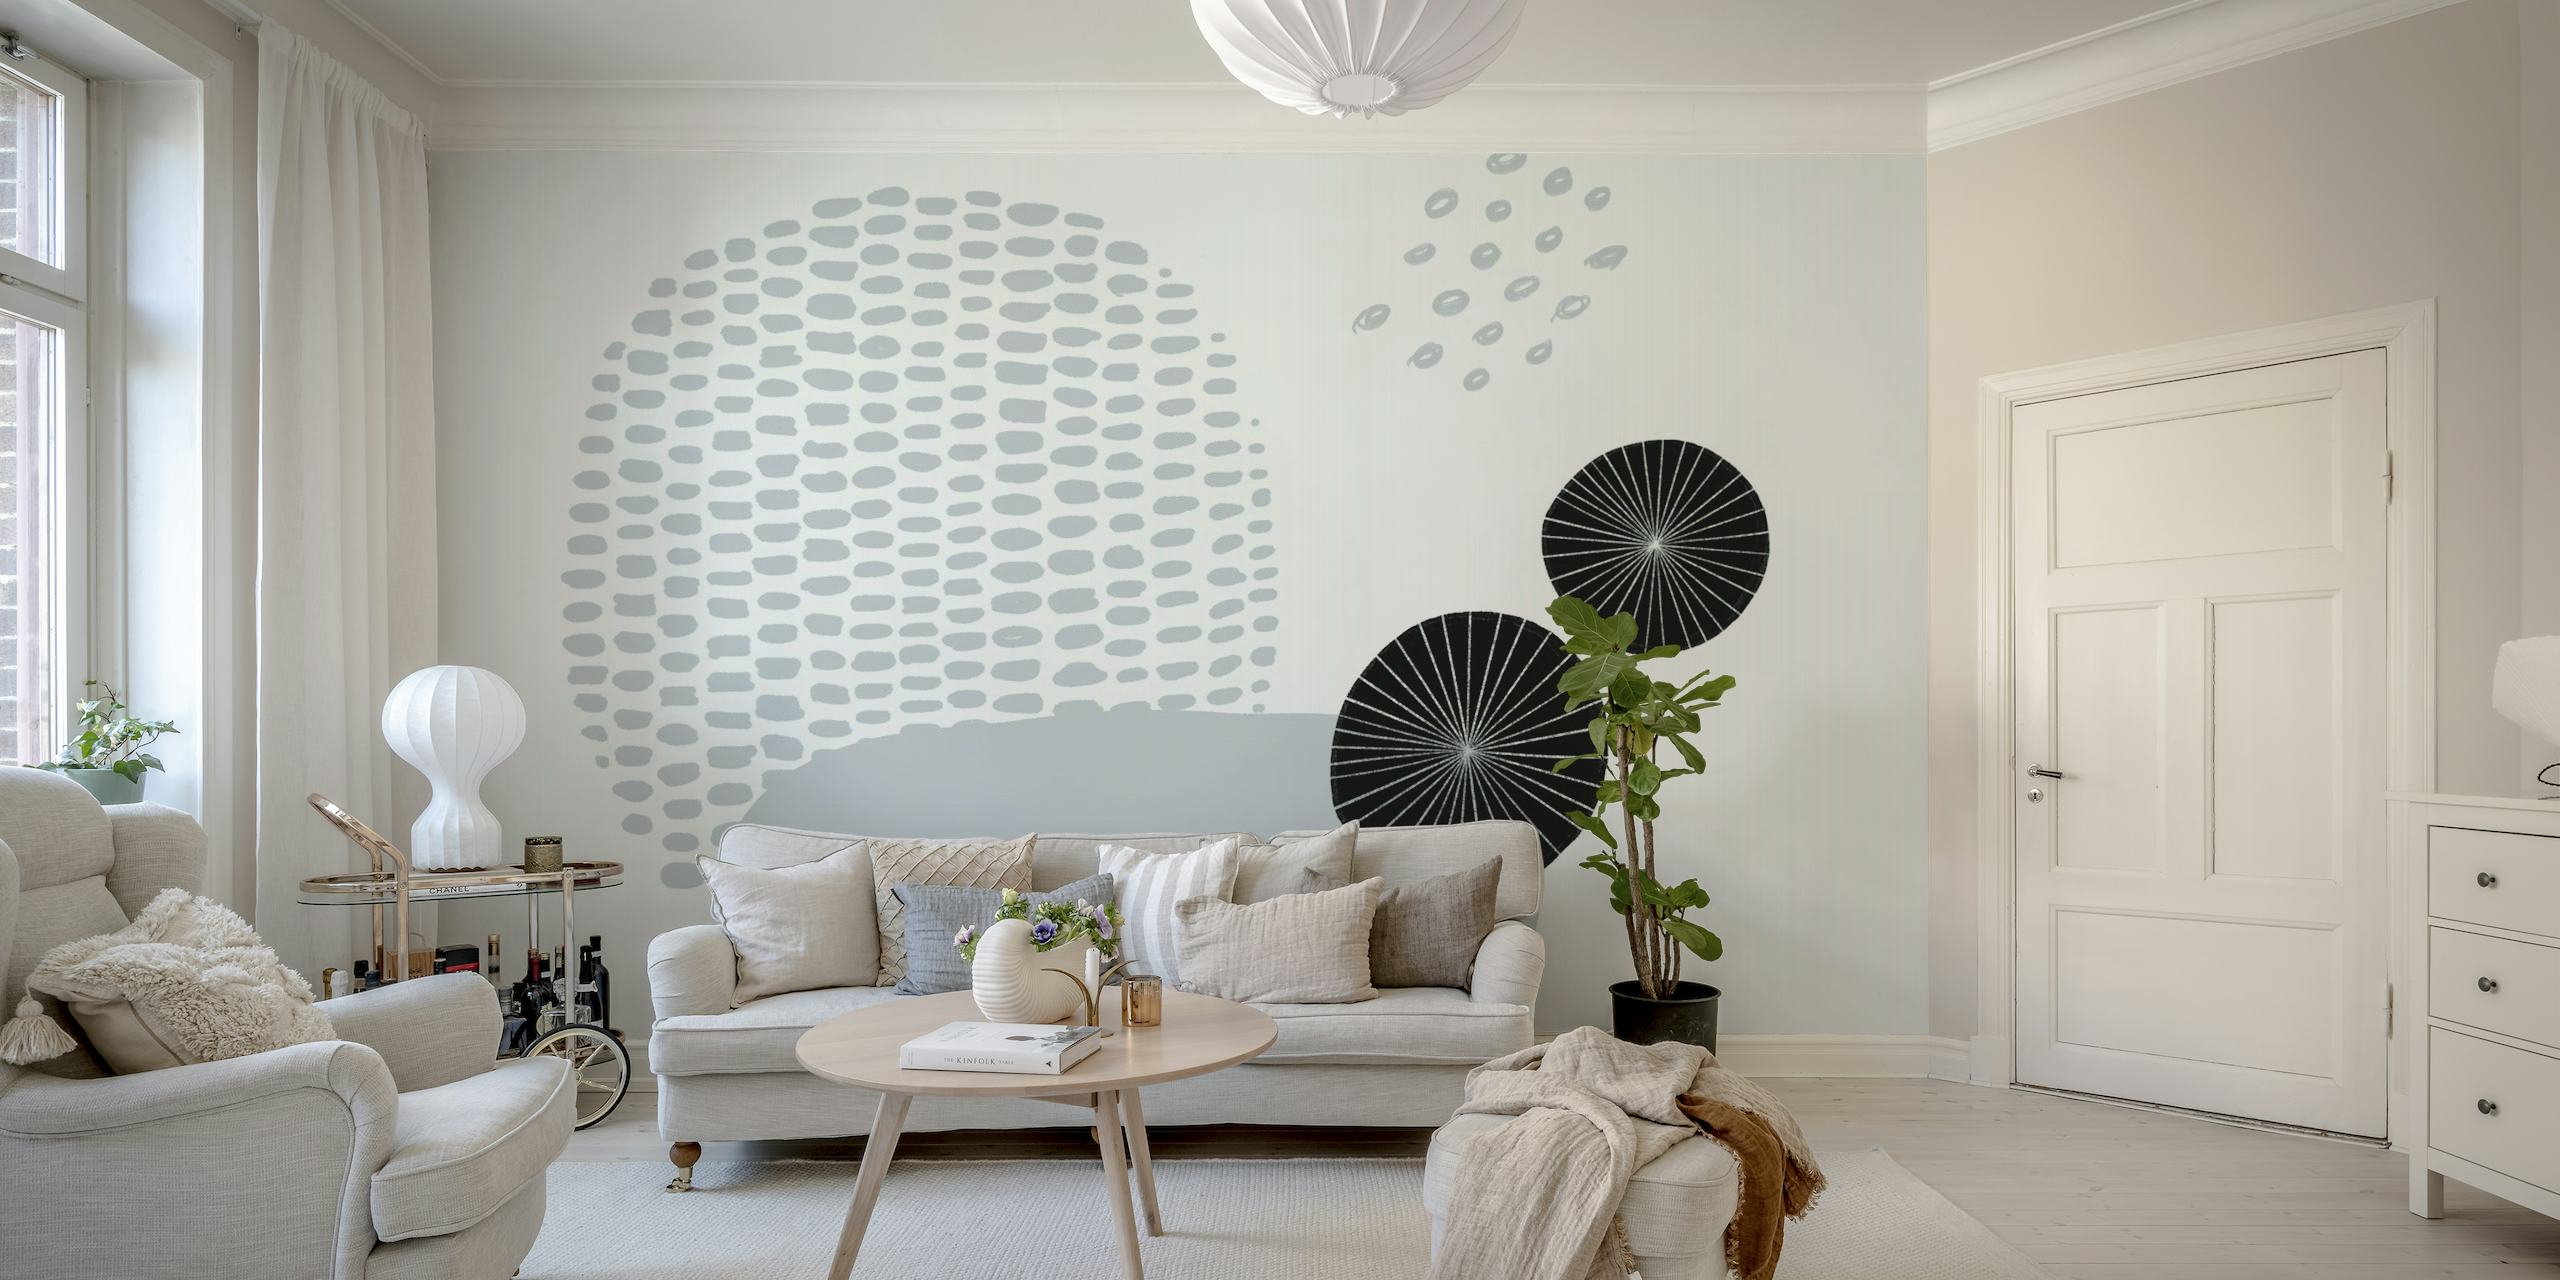 Abstraktes Graustufen-Wandbild mit kugelförmigen Formen und Punktmustern